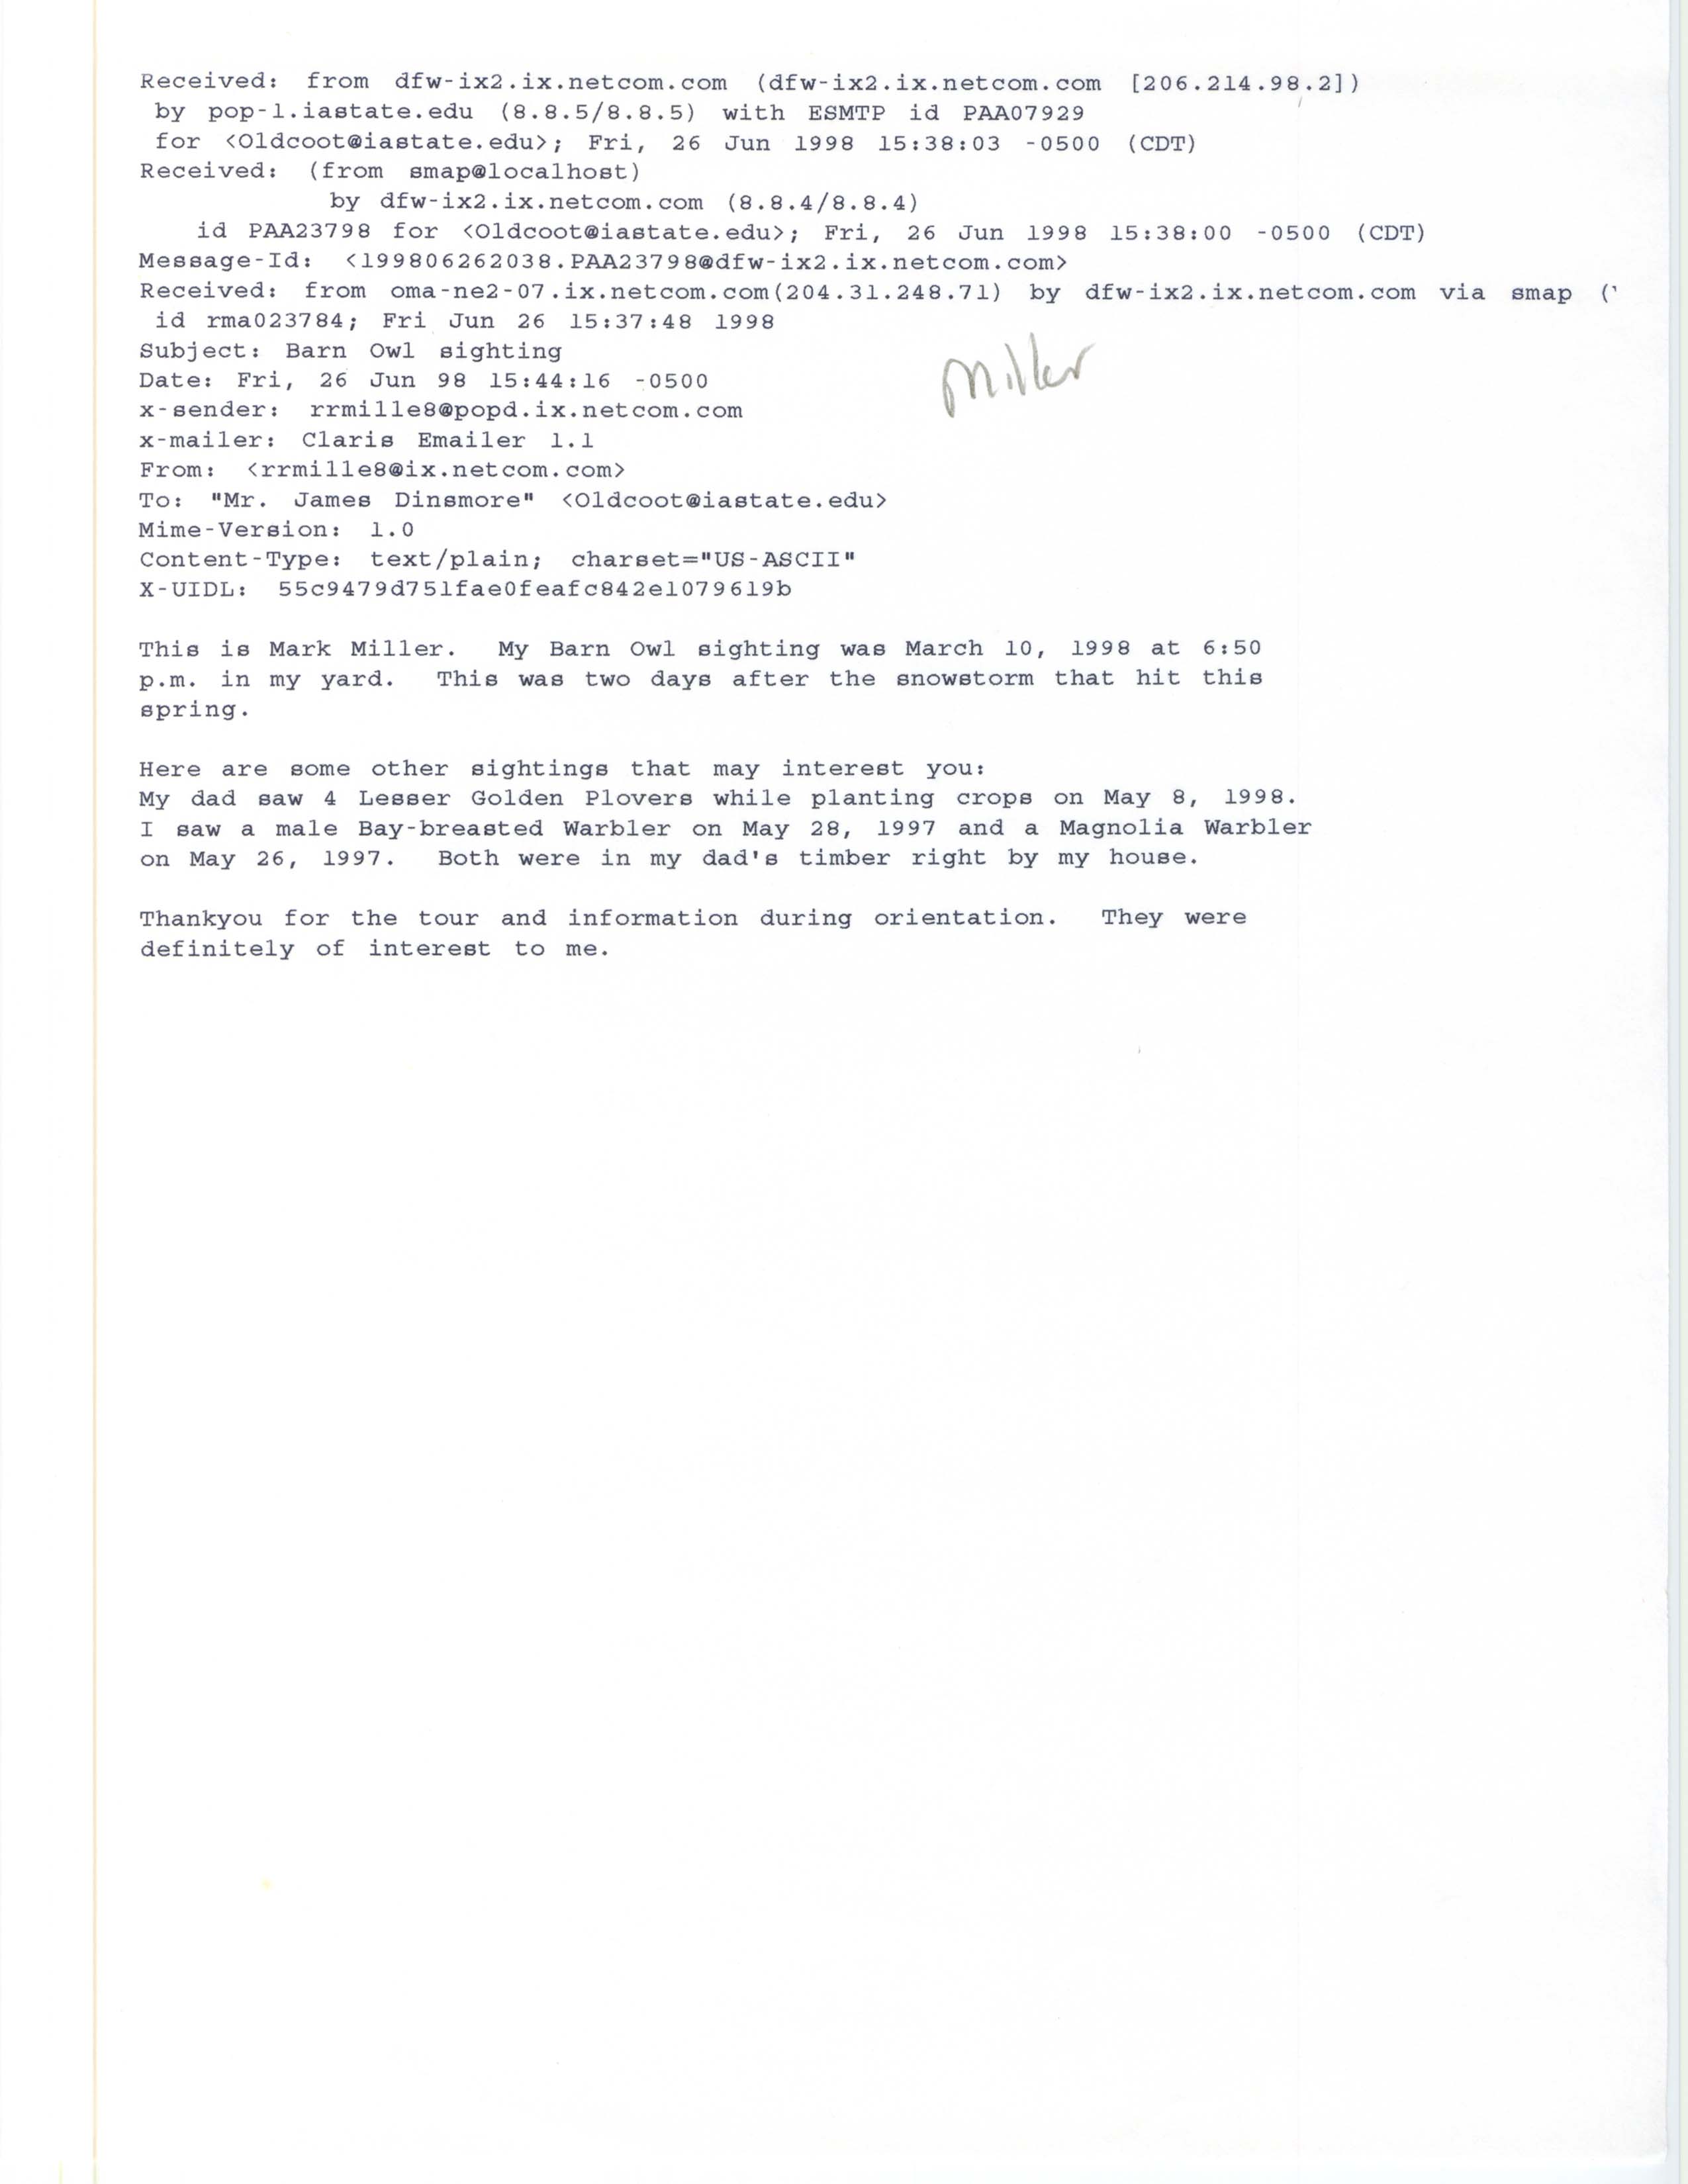 Mark Miller email to Jim Dinsmore regarding Barn Owl sighting, June 26, 1998